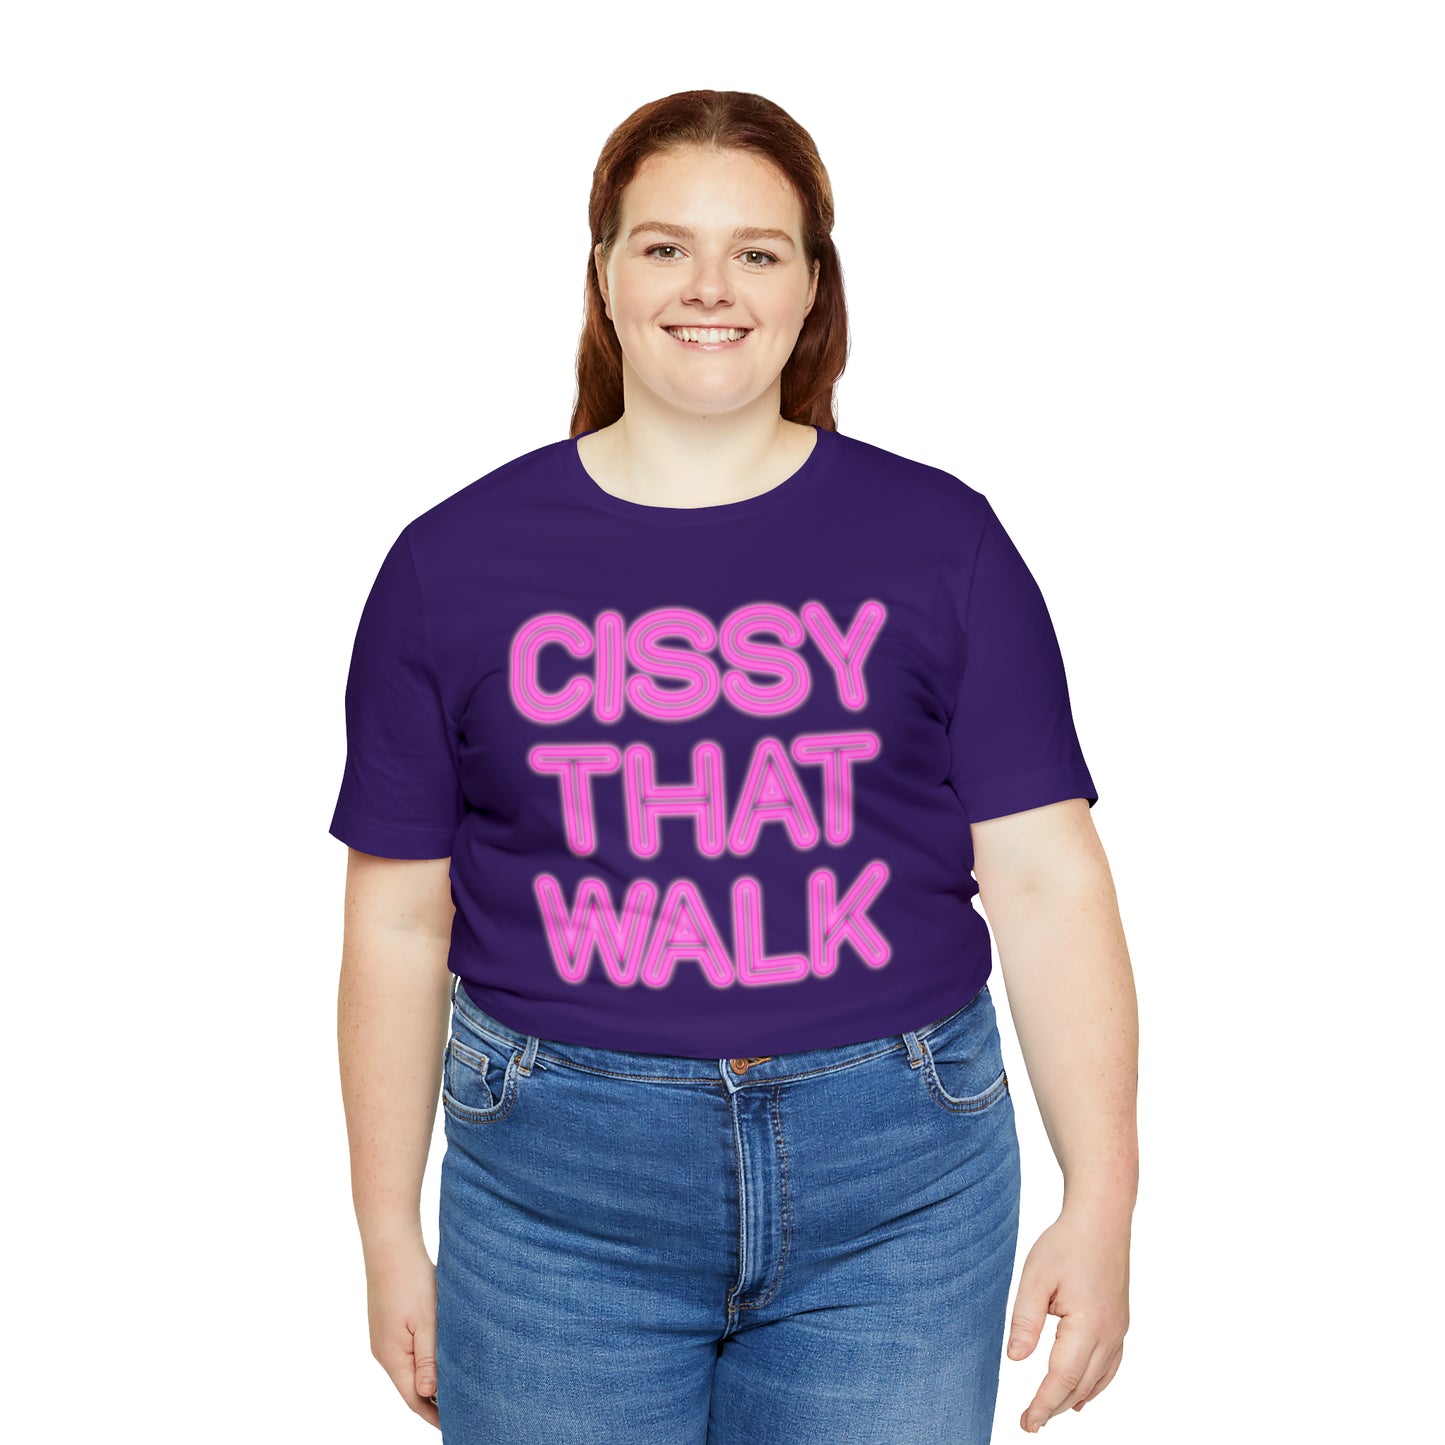 Cissy That Walk